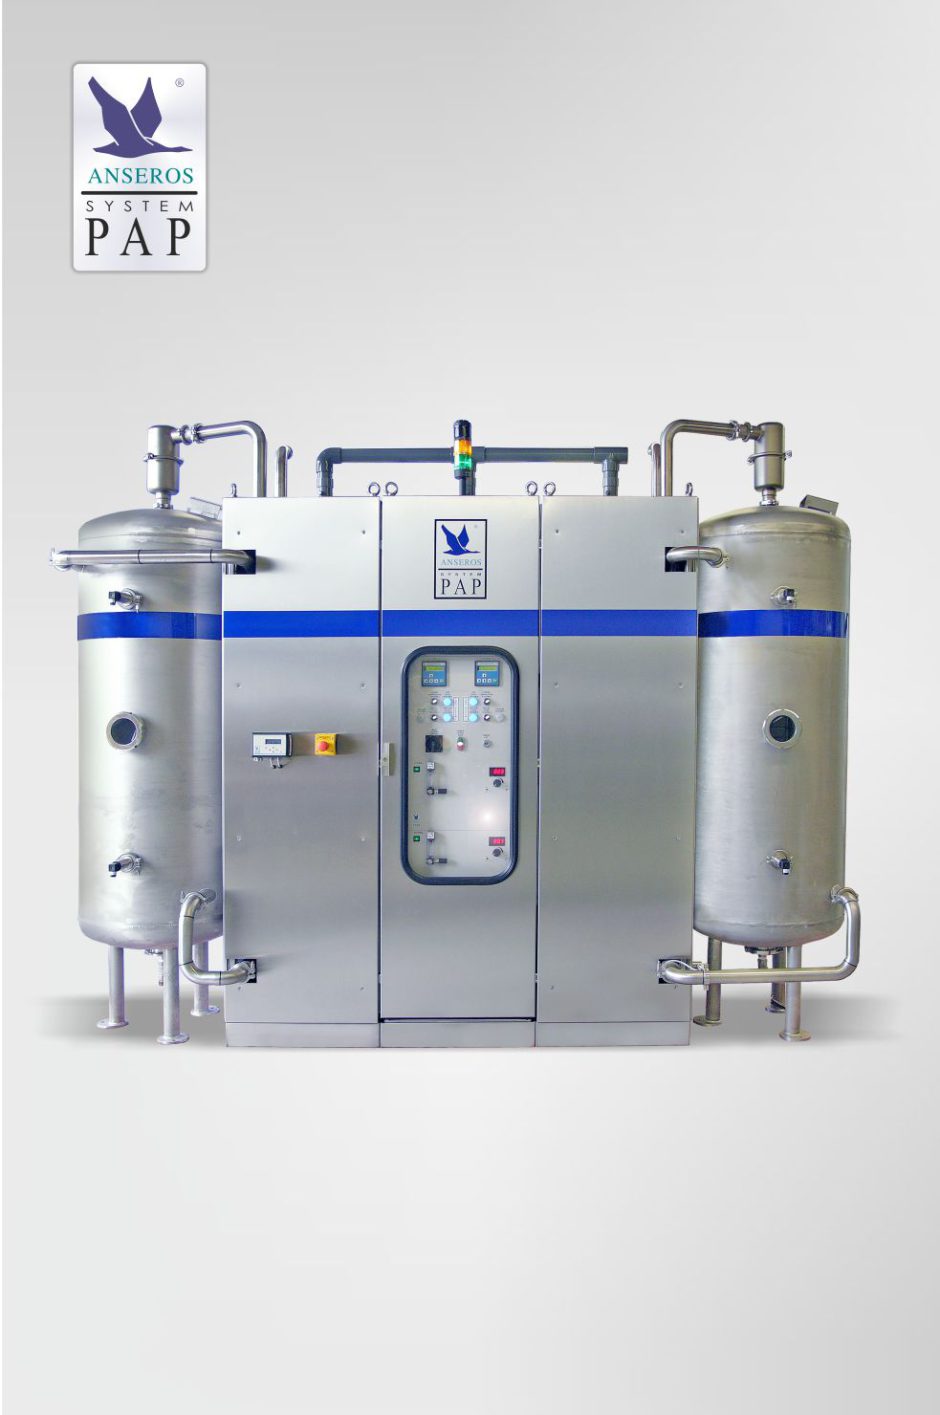 ANSEROS-ozone-water-sterilization-system-PAP30000